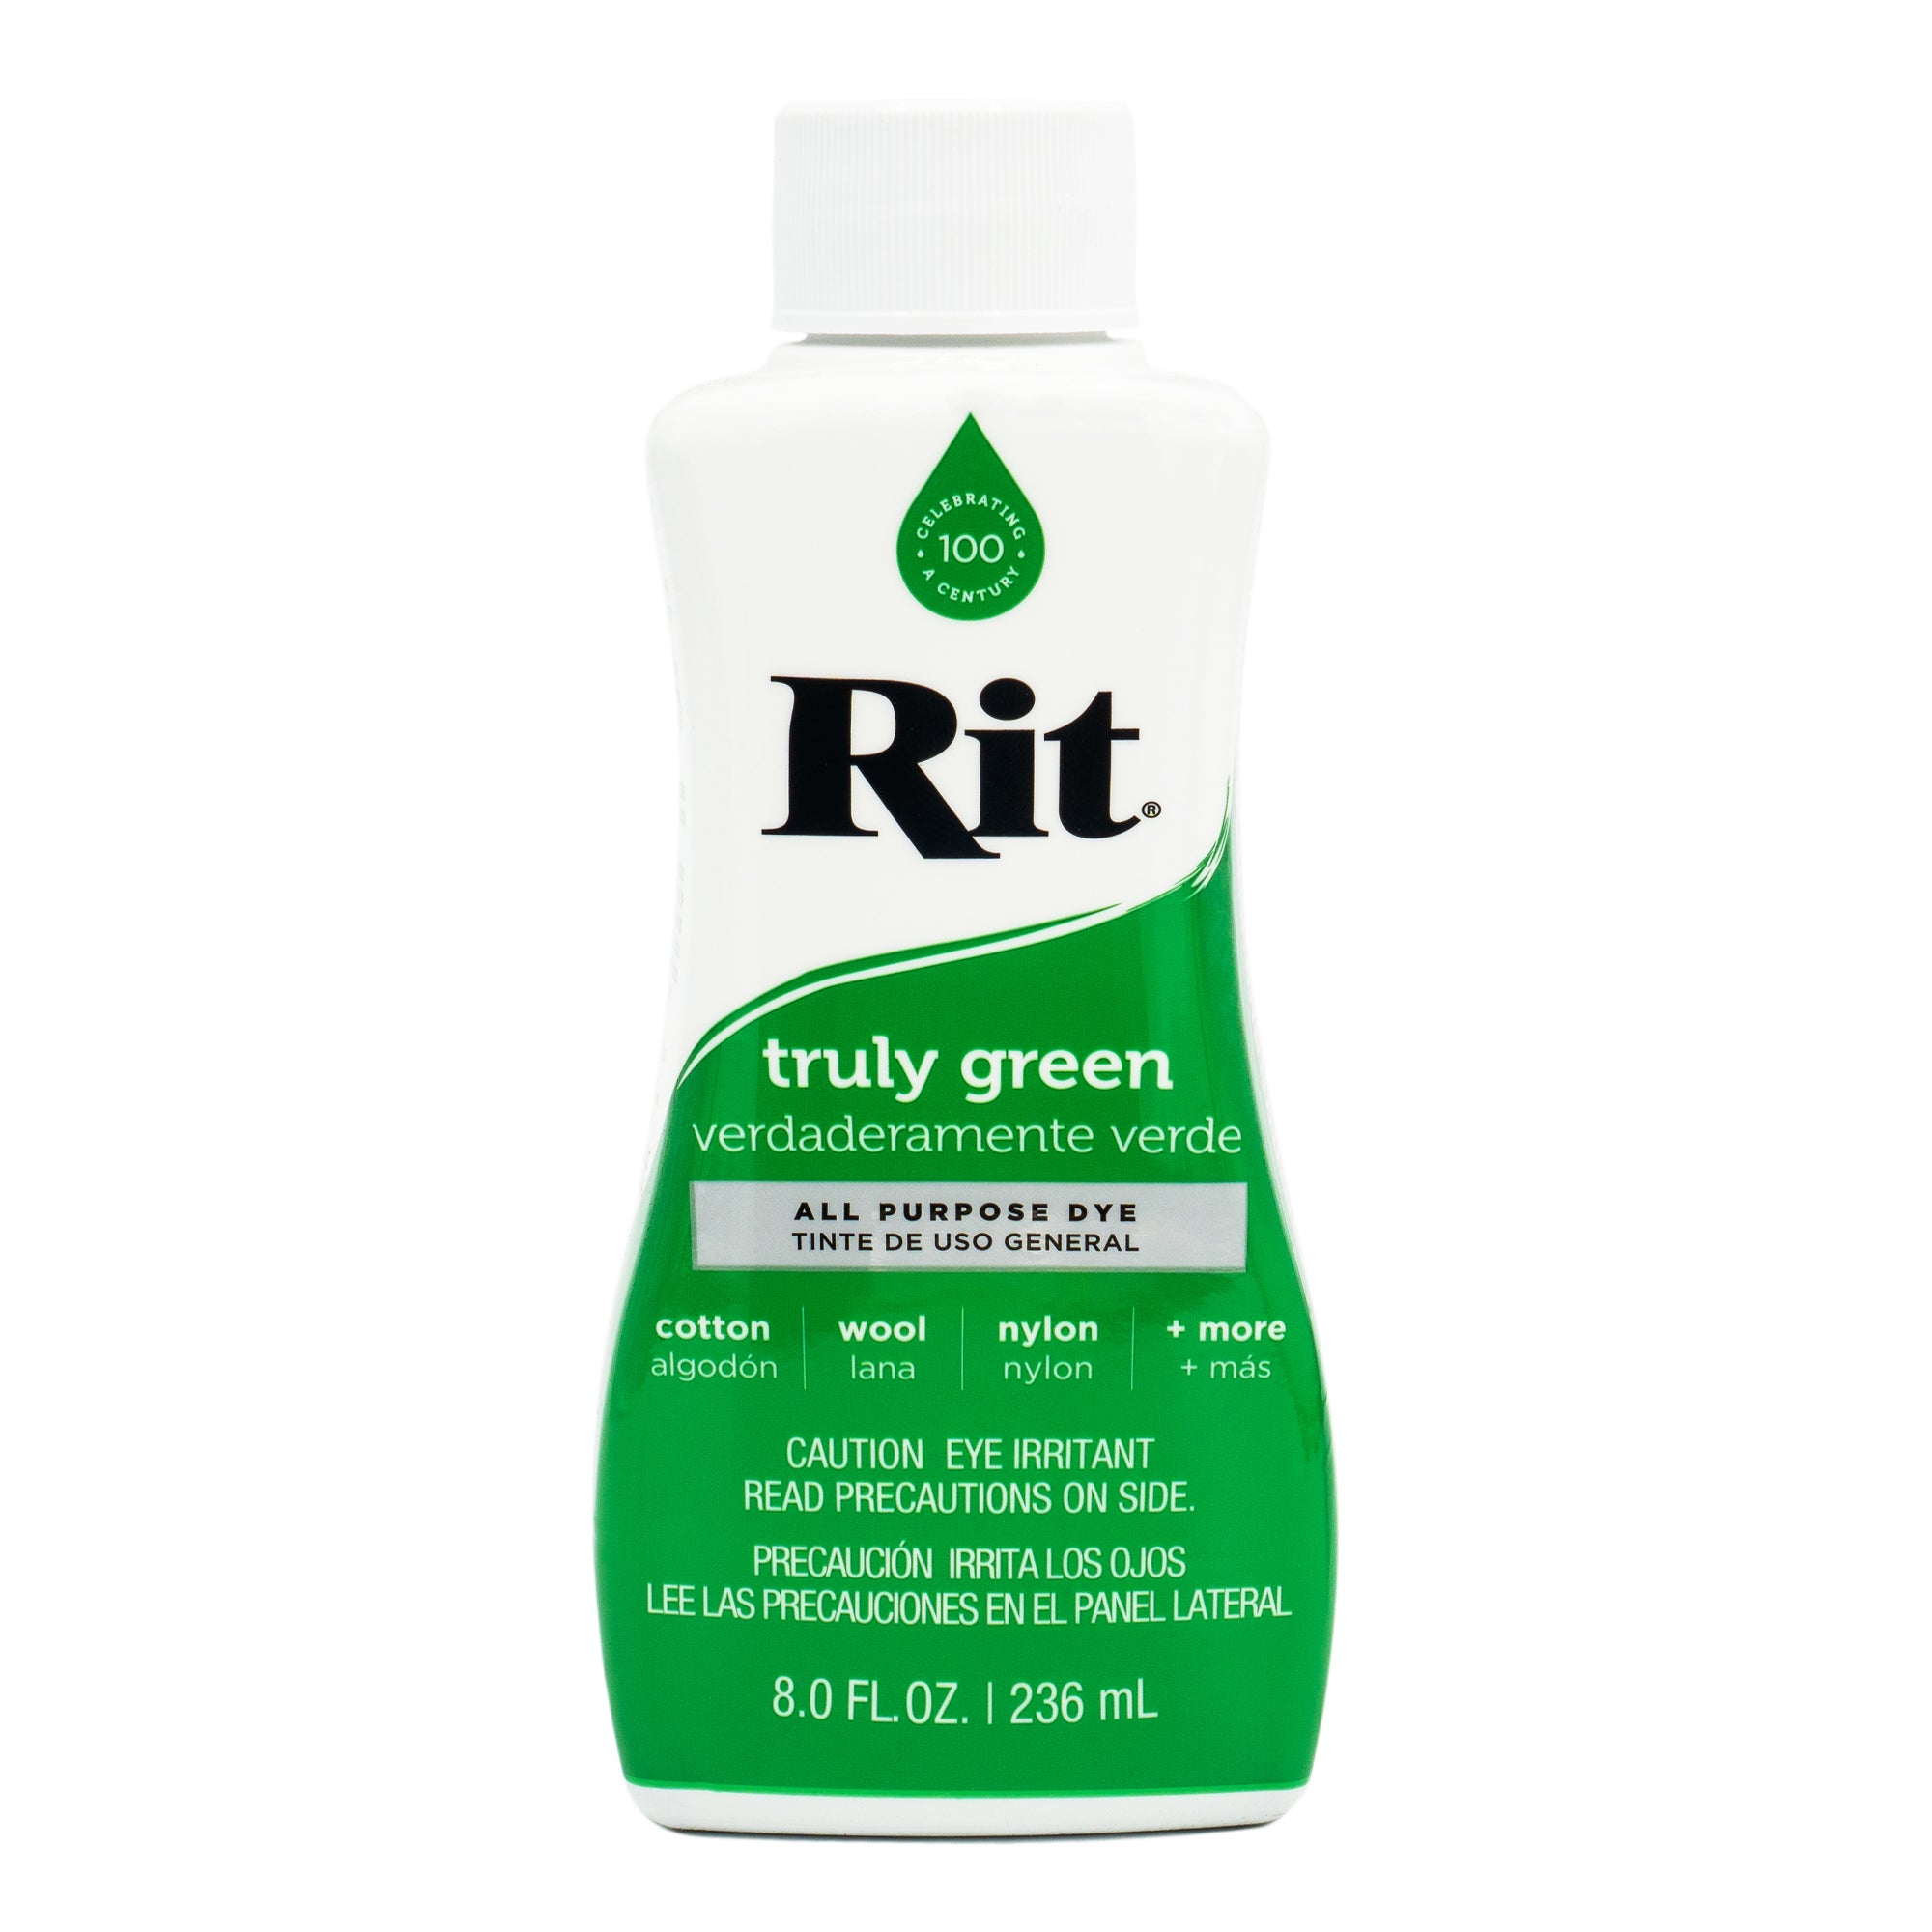 Rit Neon Green Liquid Dye - 8oz - Fluorescent Paint - Dye & Paint